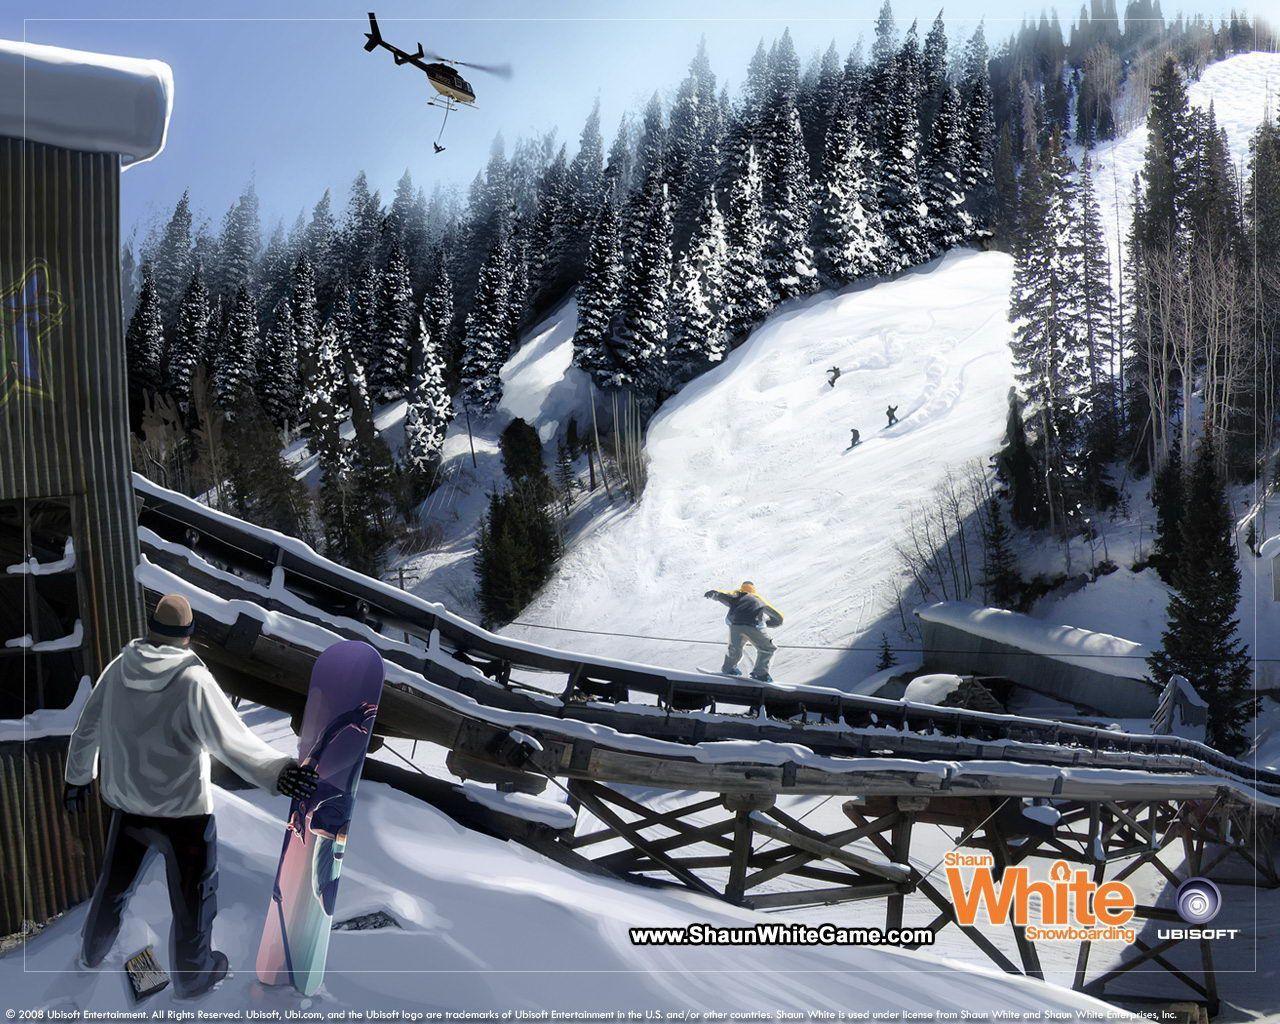 Shaun White Snowboarding Wallpaper. HCL